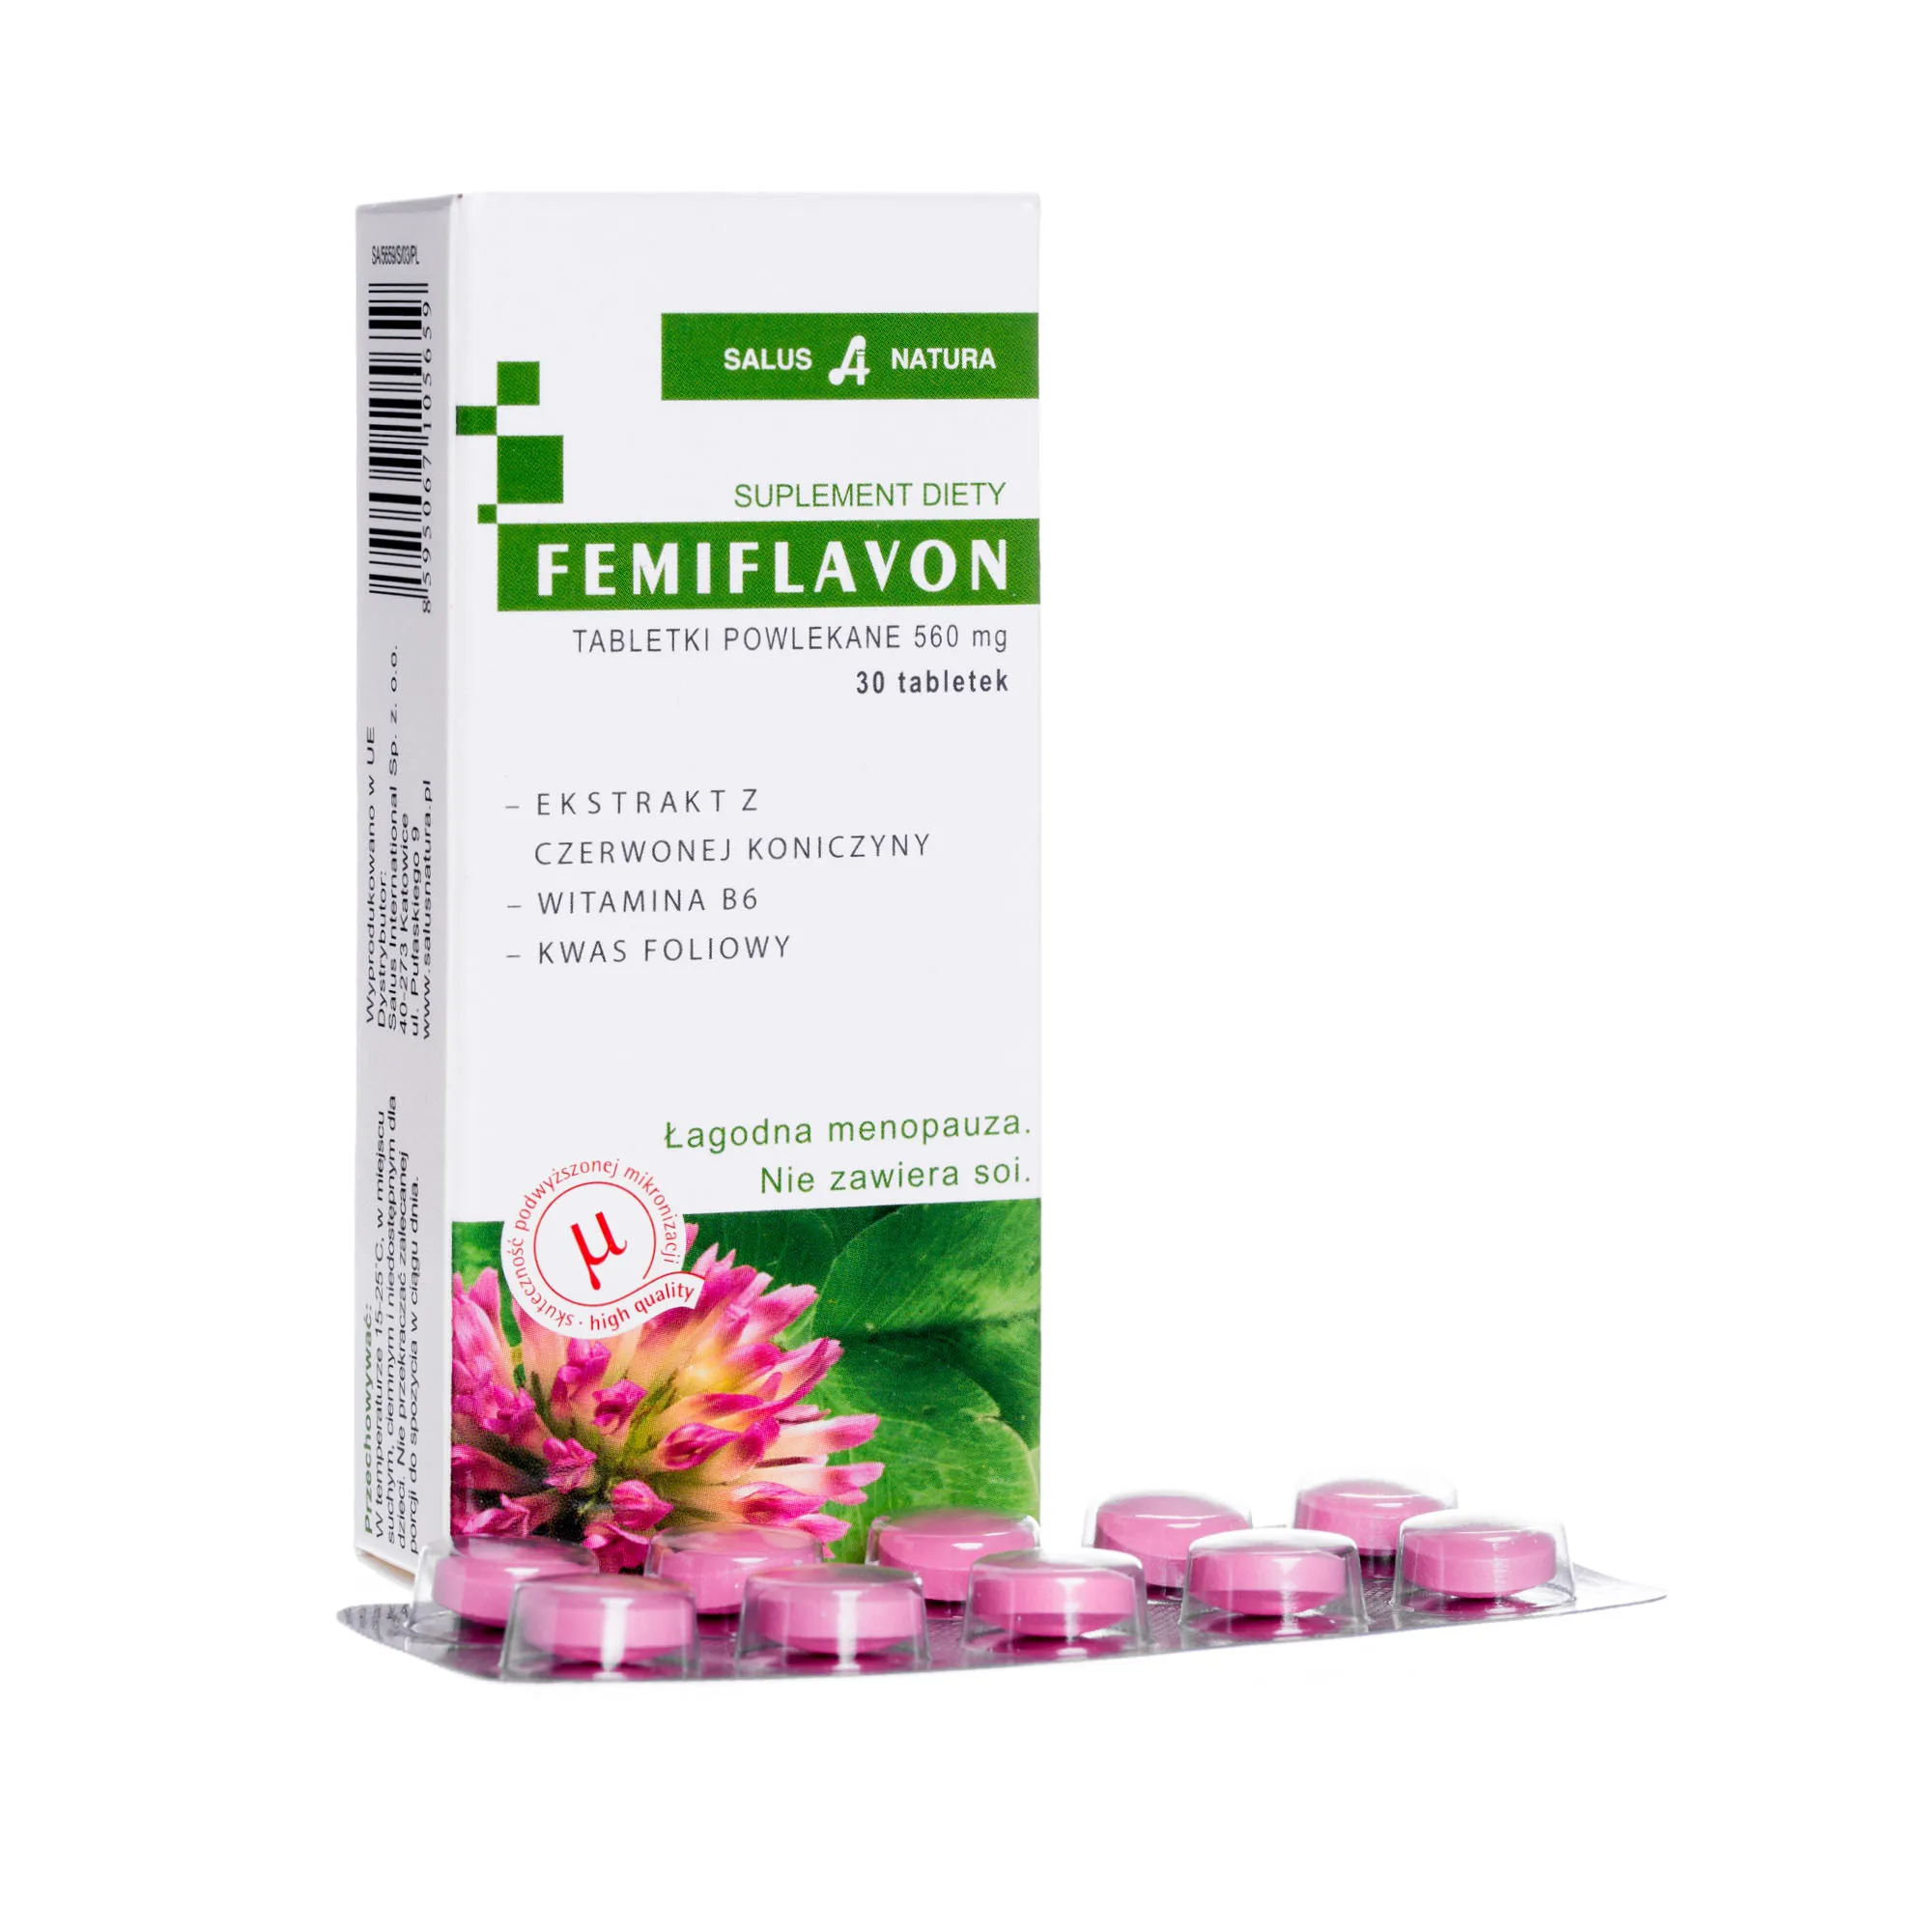 Femiflavon, tabletki powlekane 560 mg, 30 tabletek